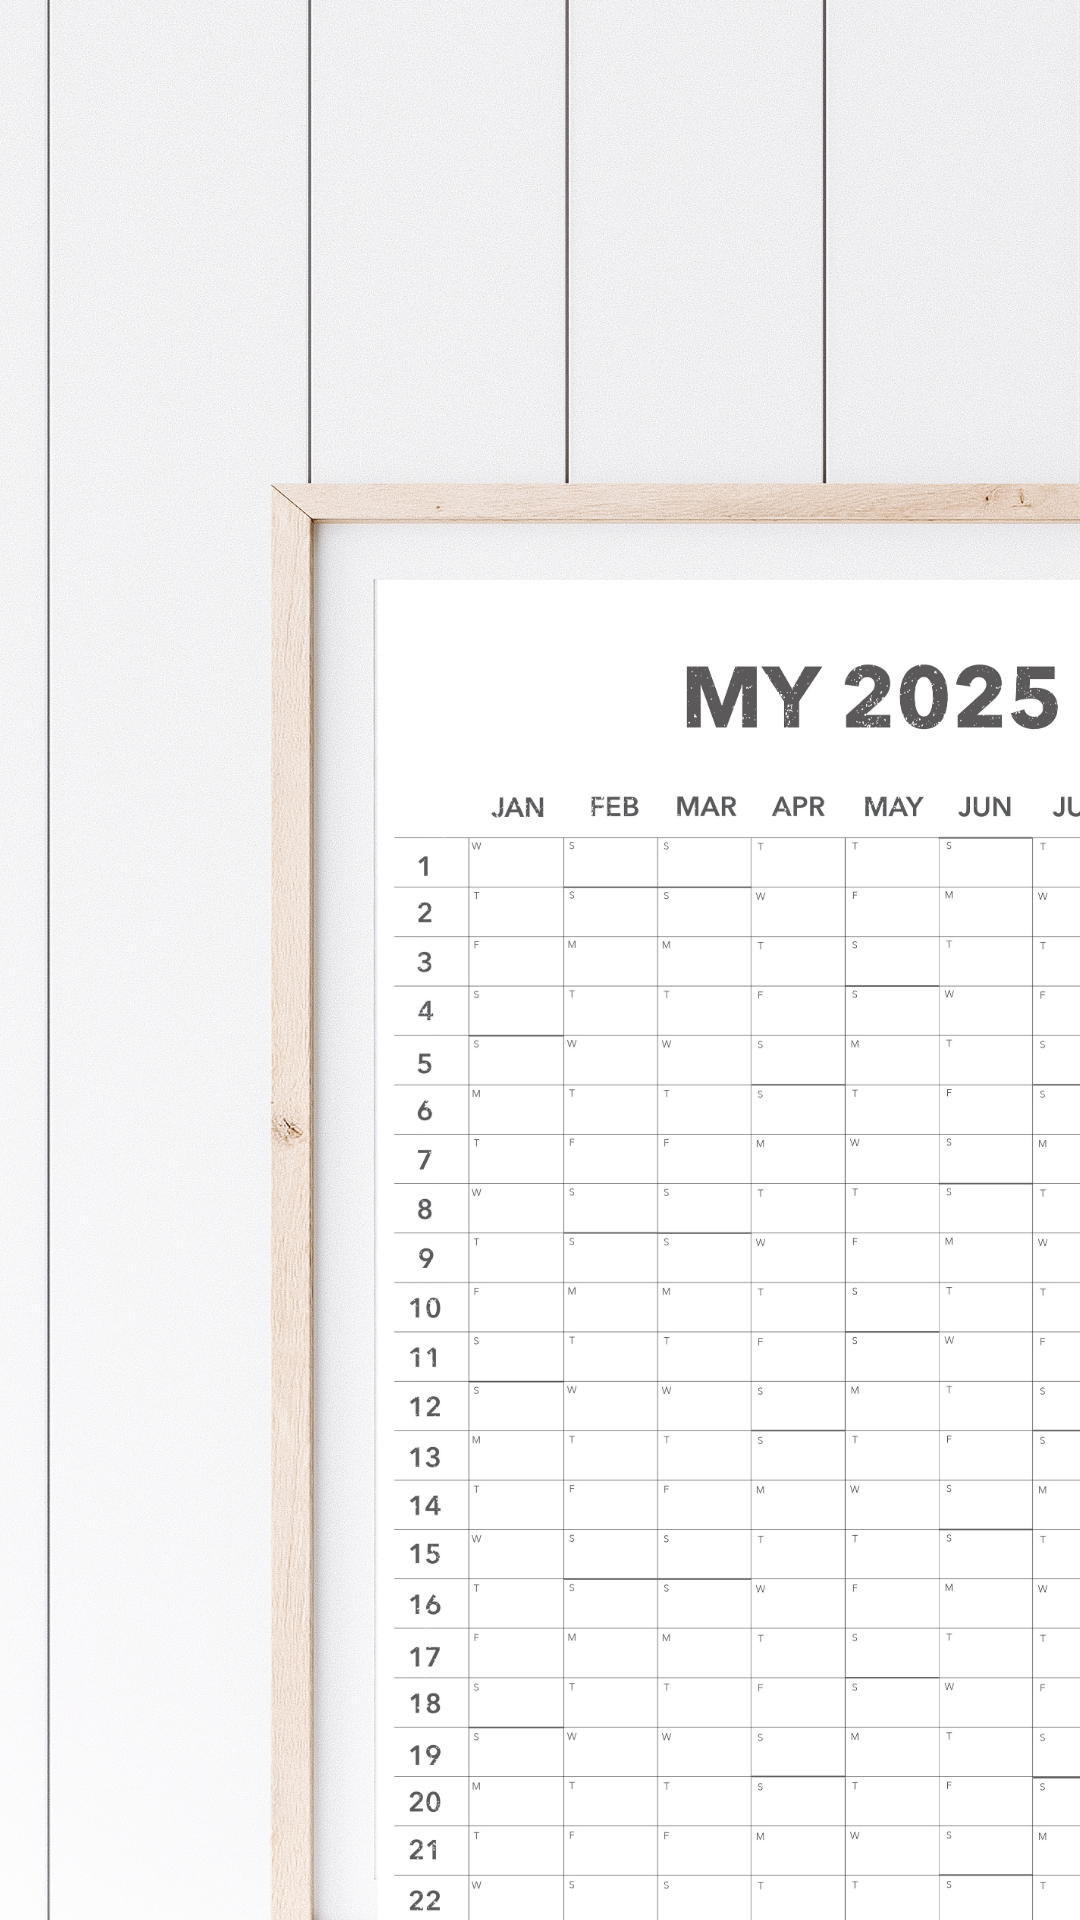 My 2025 Plan Wall Calendar - 24" x 36" - PHYSICAL COPY